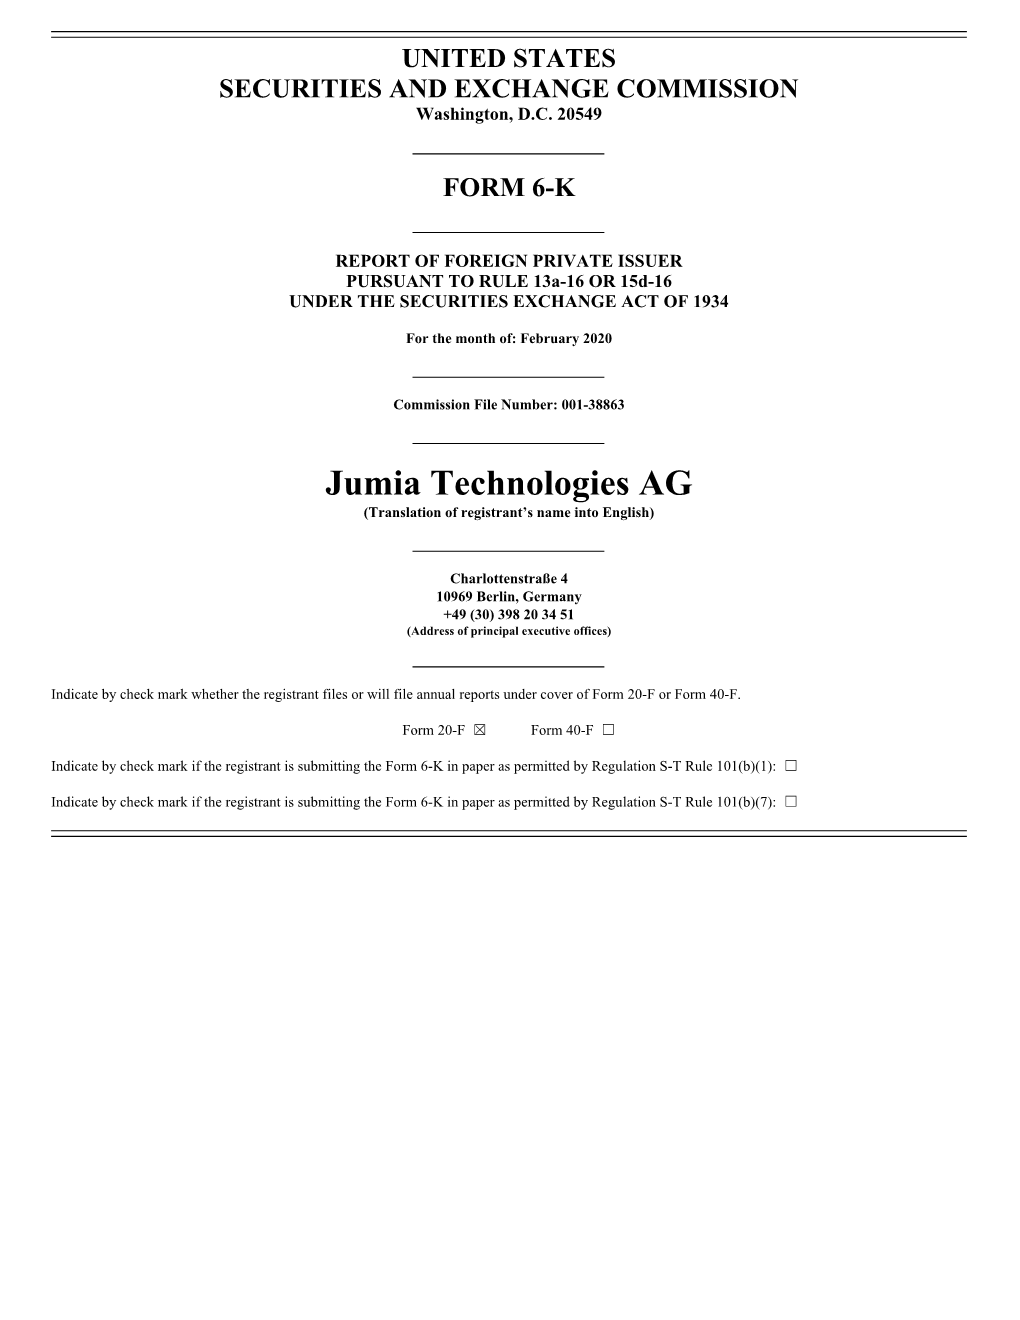 Jumia Technologies AG (Translation of Registrant’S Name Into English)